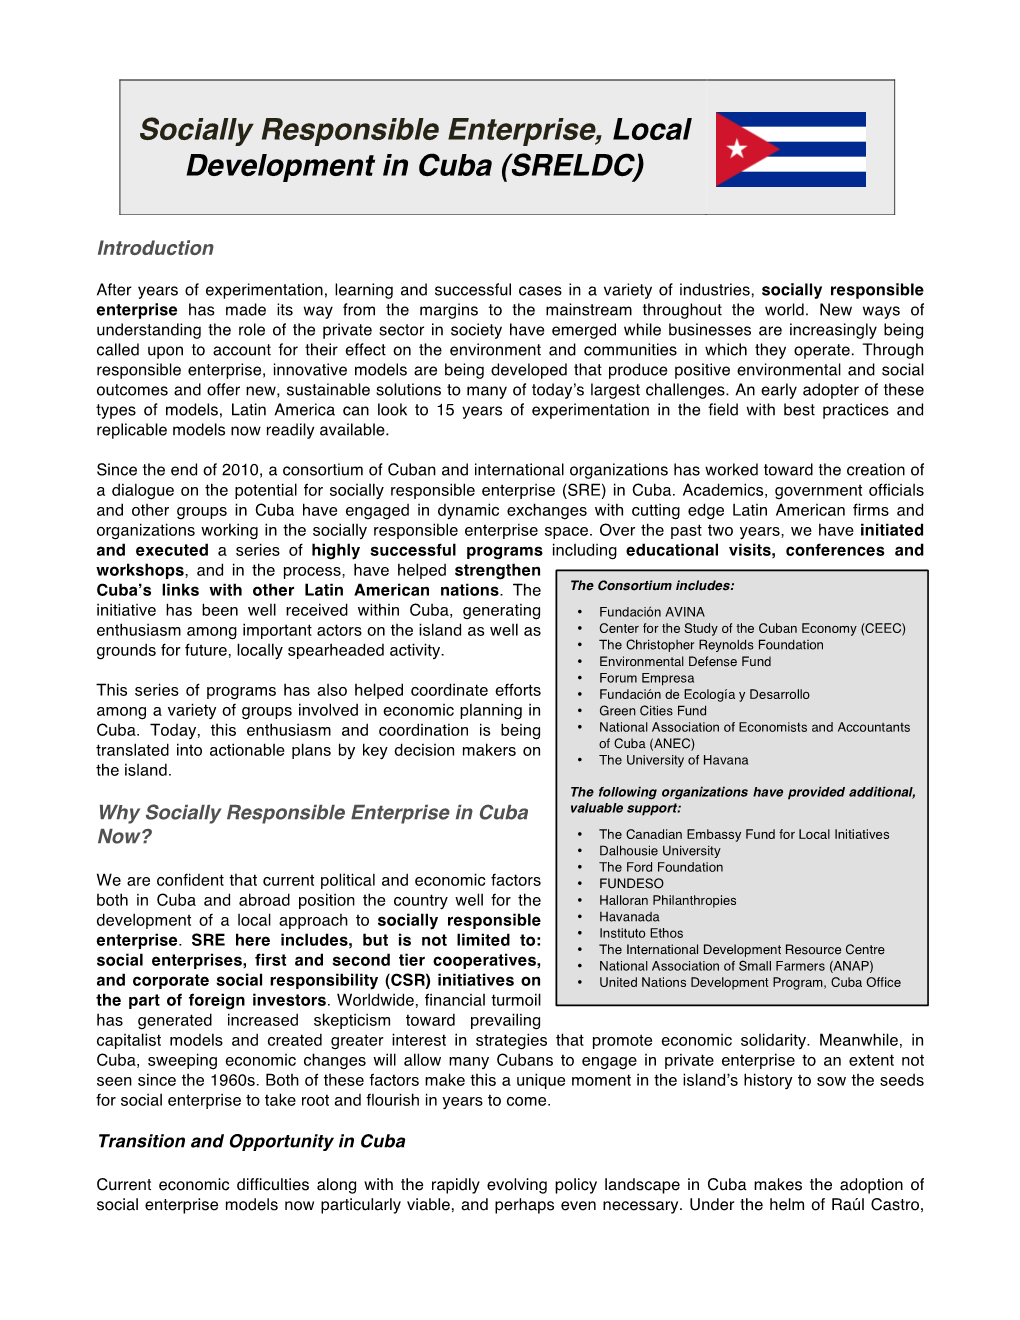 Socially Responsible Enterprise, Local Development in Cuba (SRELDC)